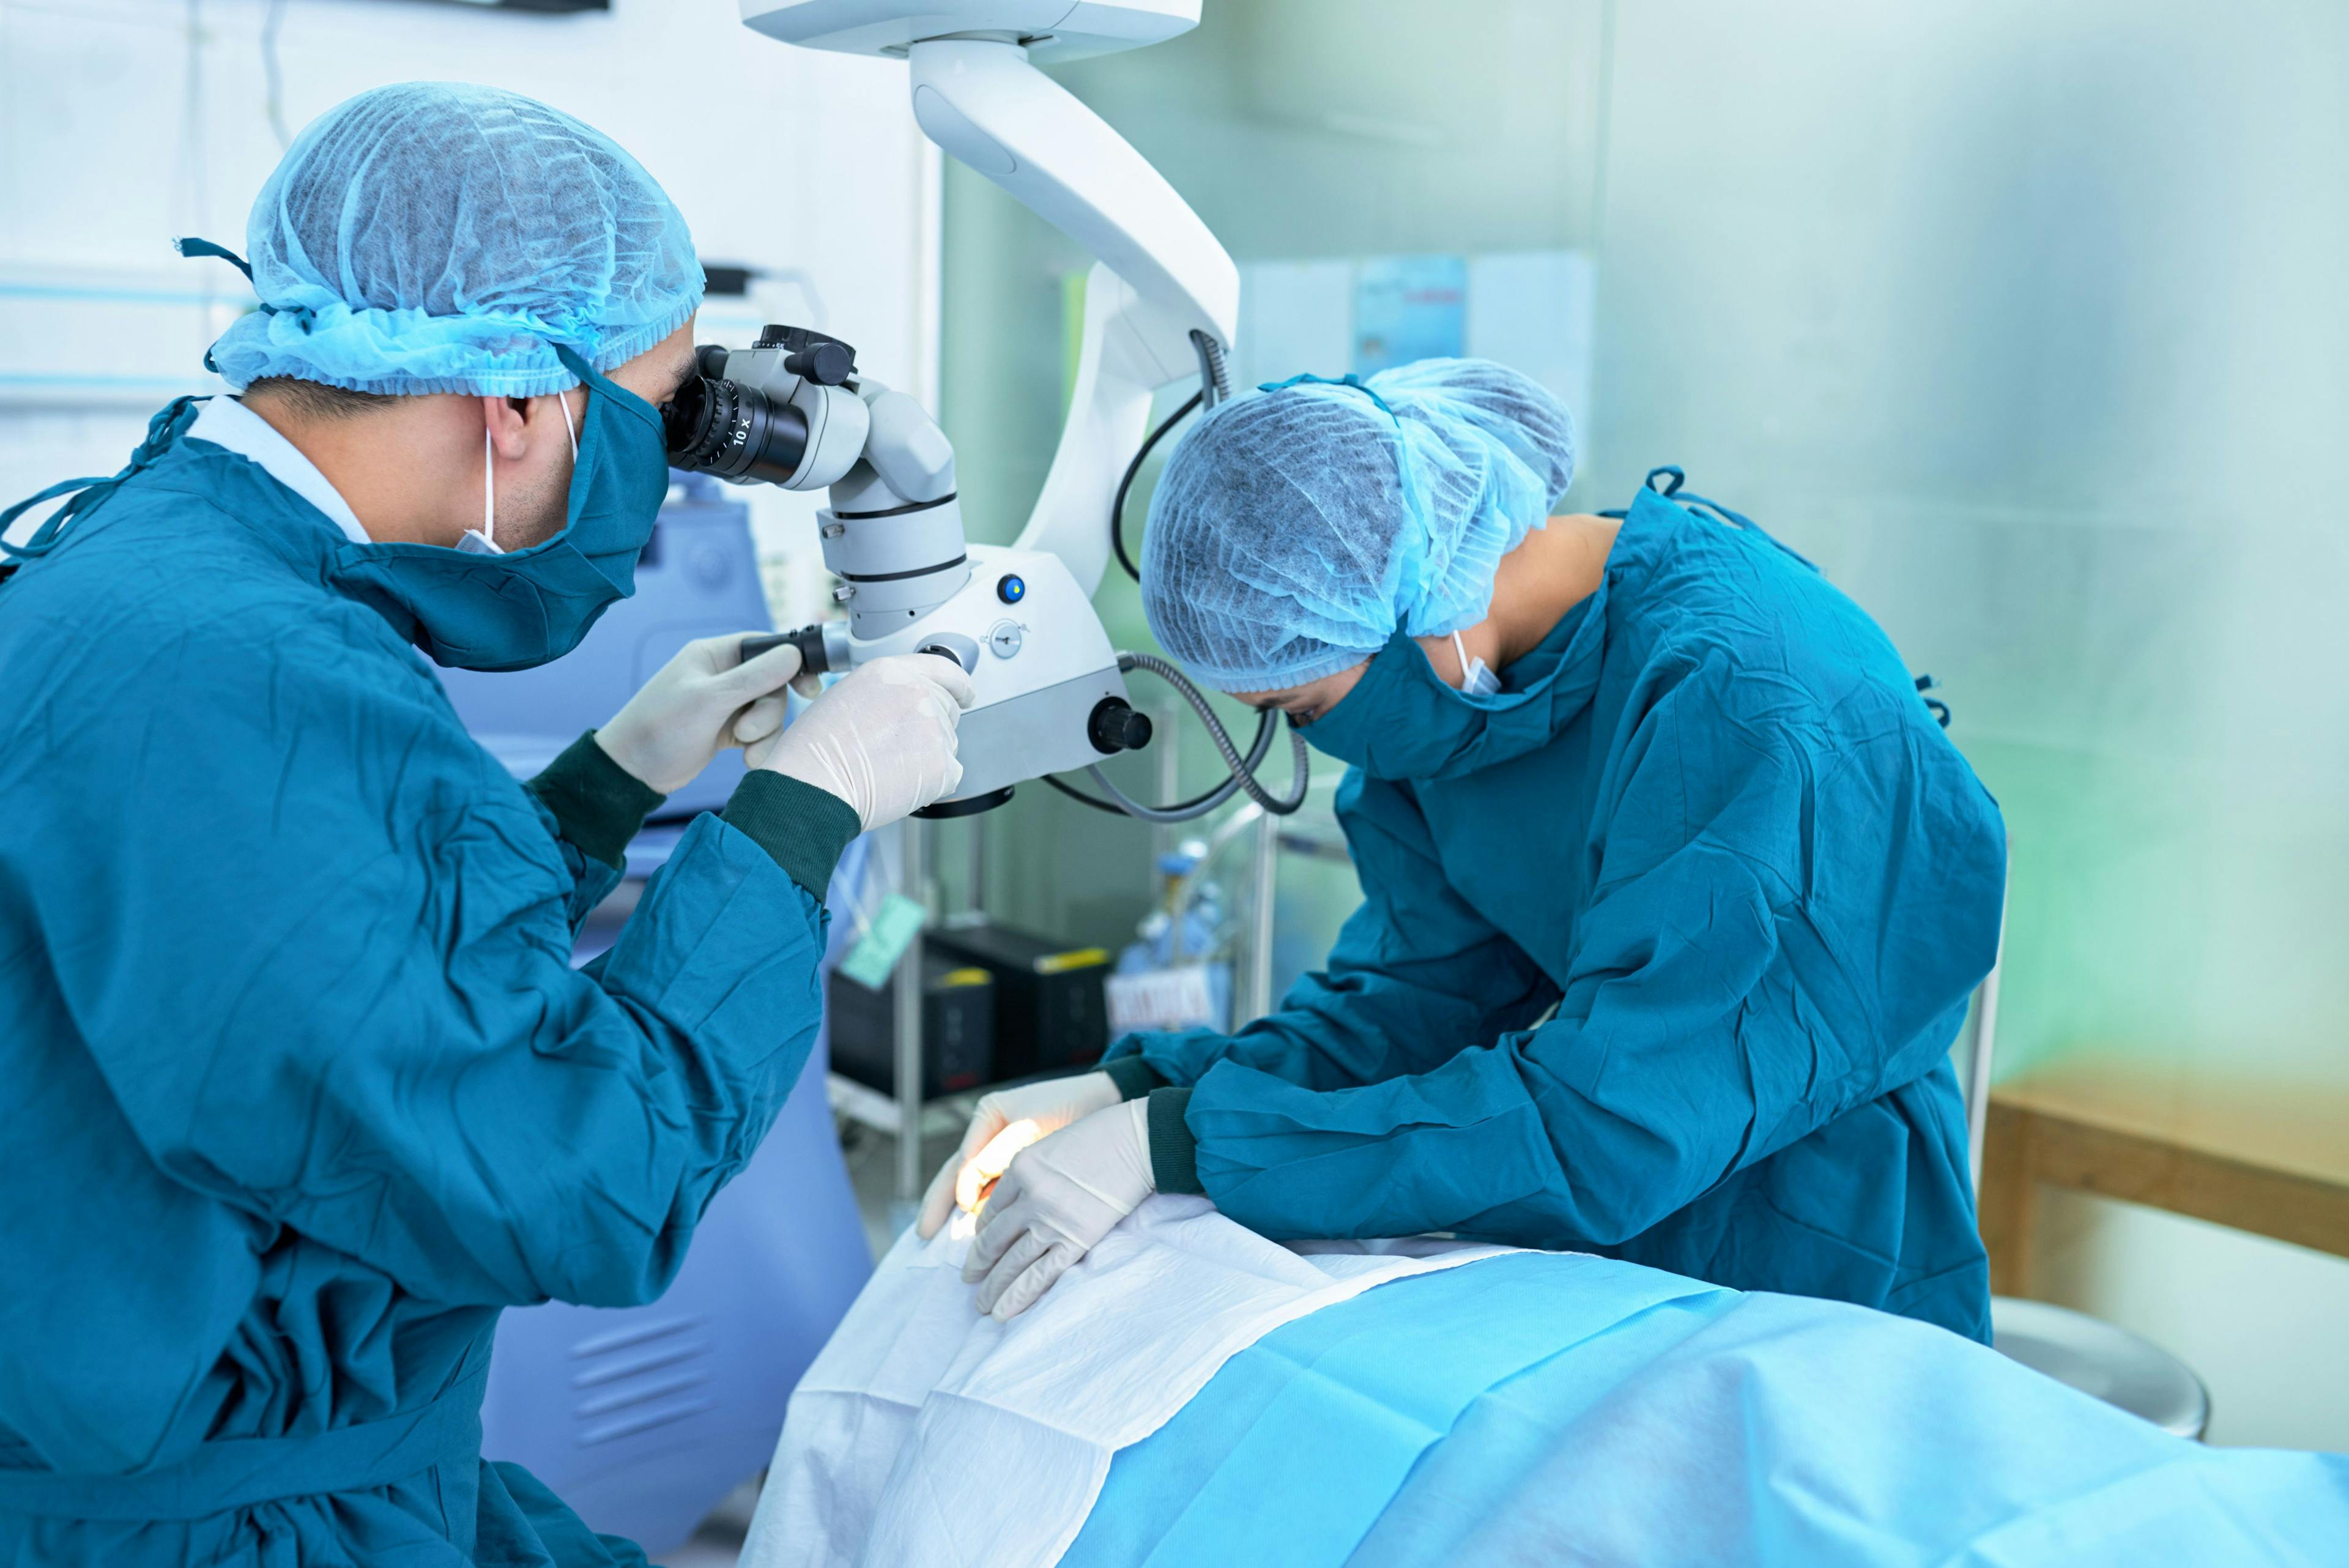 Doctors in operating room performing eye surgery